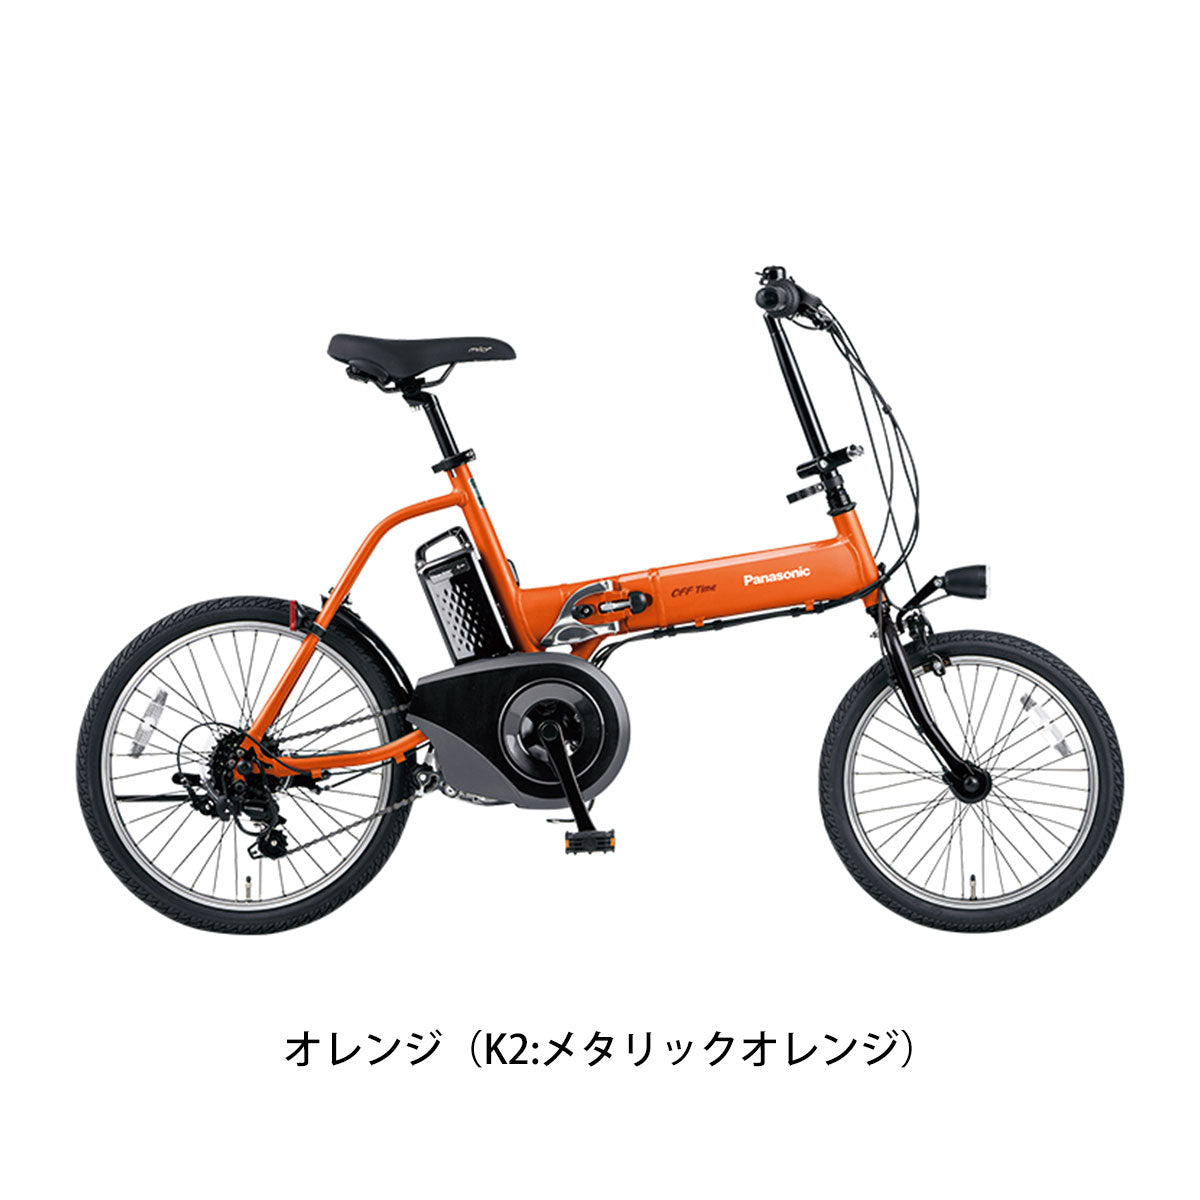 Panasonic オフタイム OFF Time 電動自転車 - 自転車